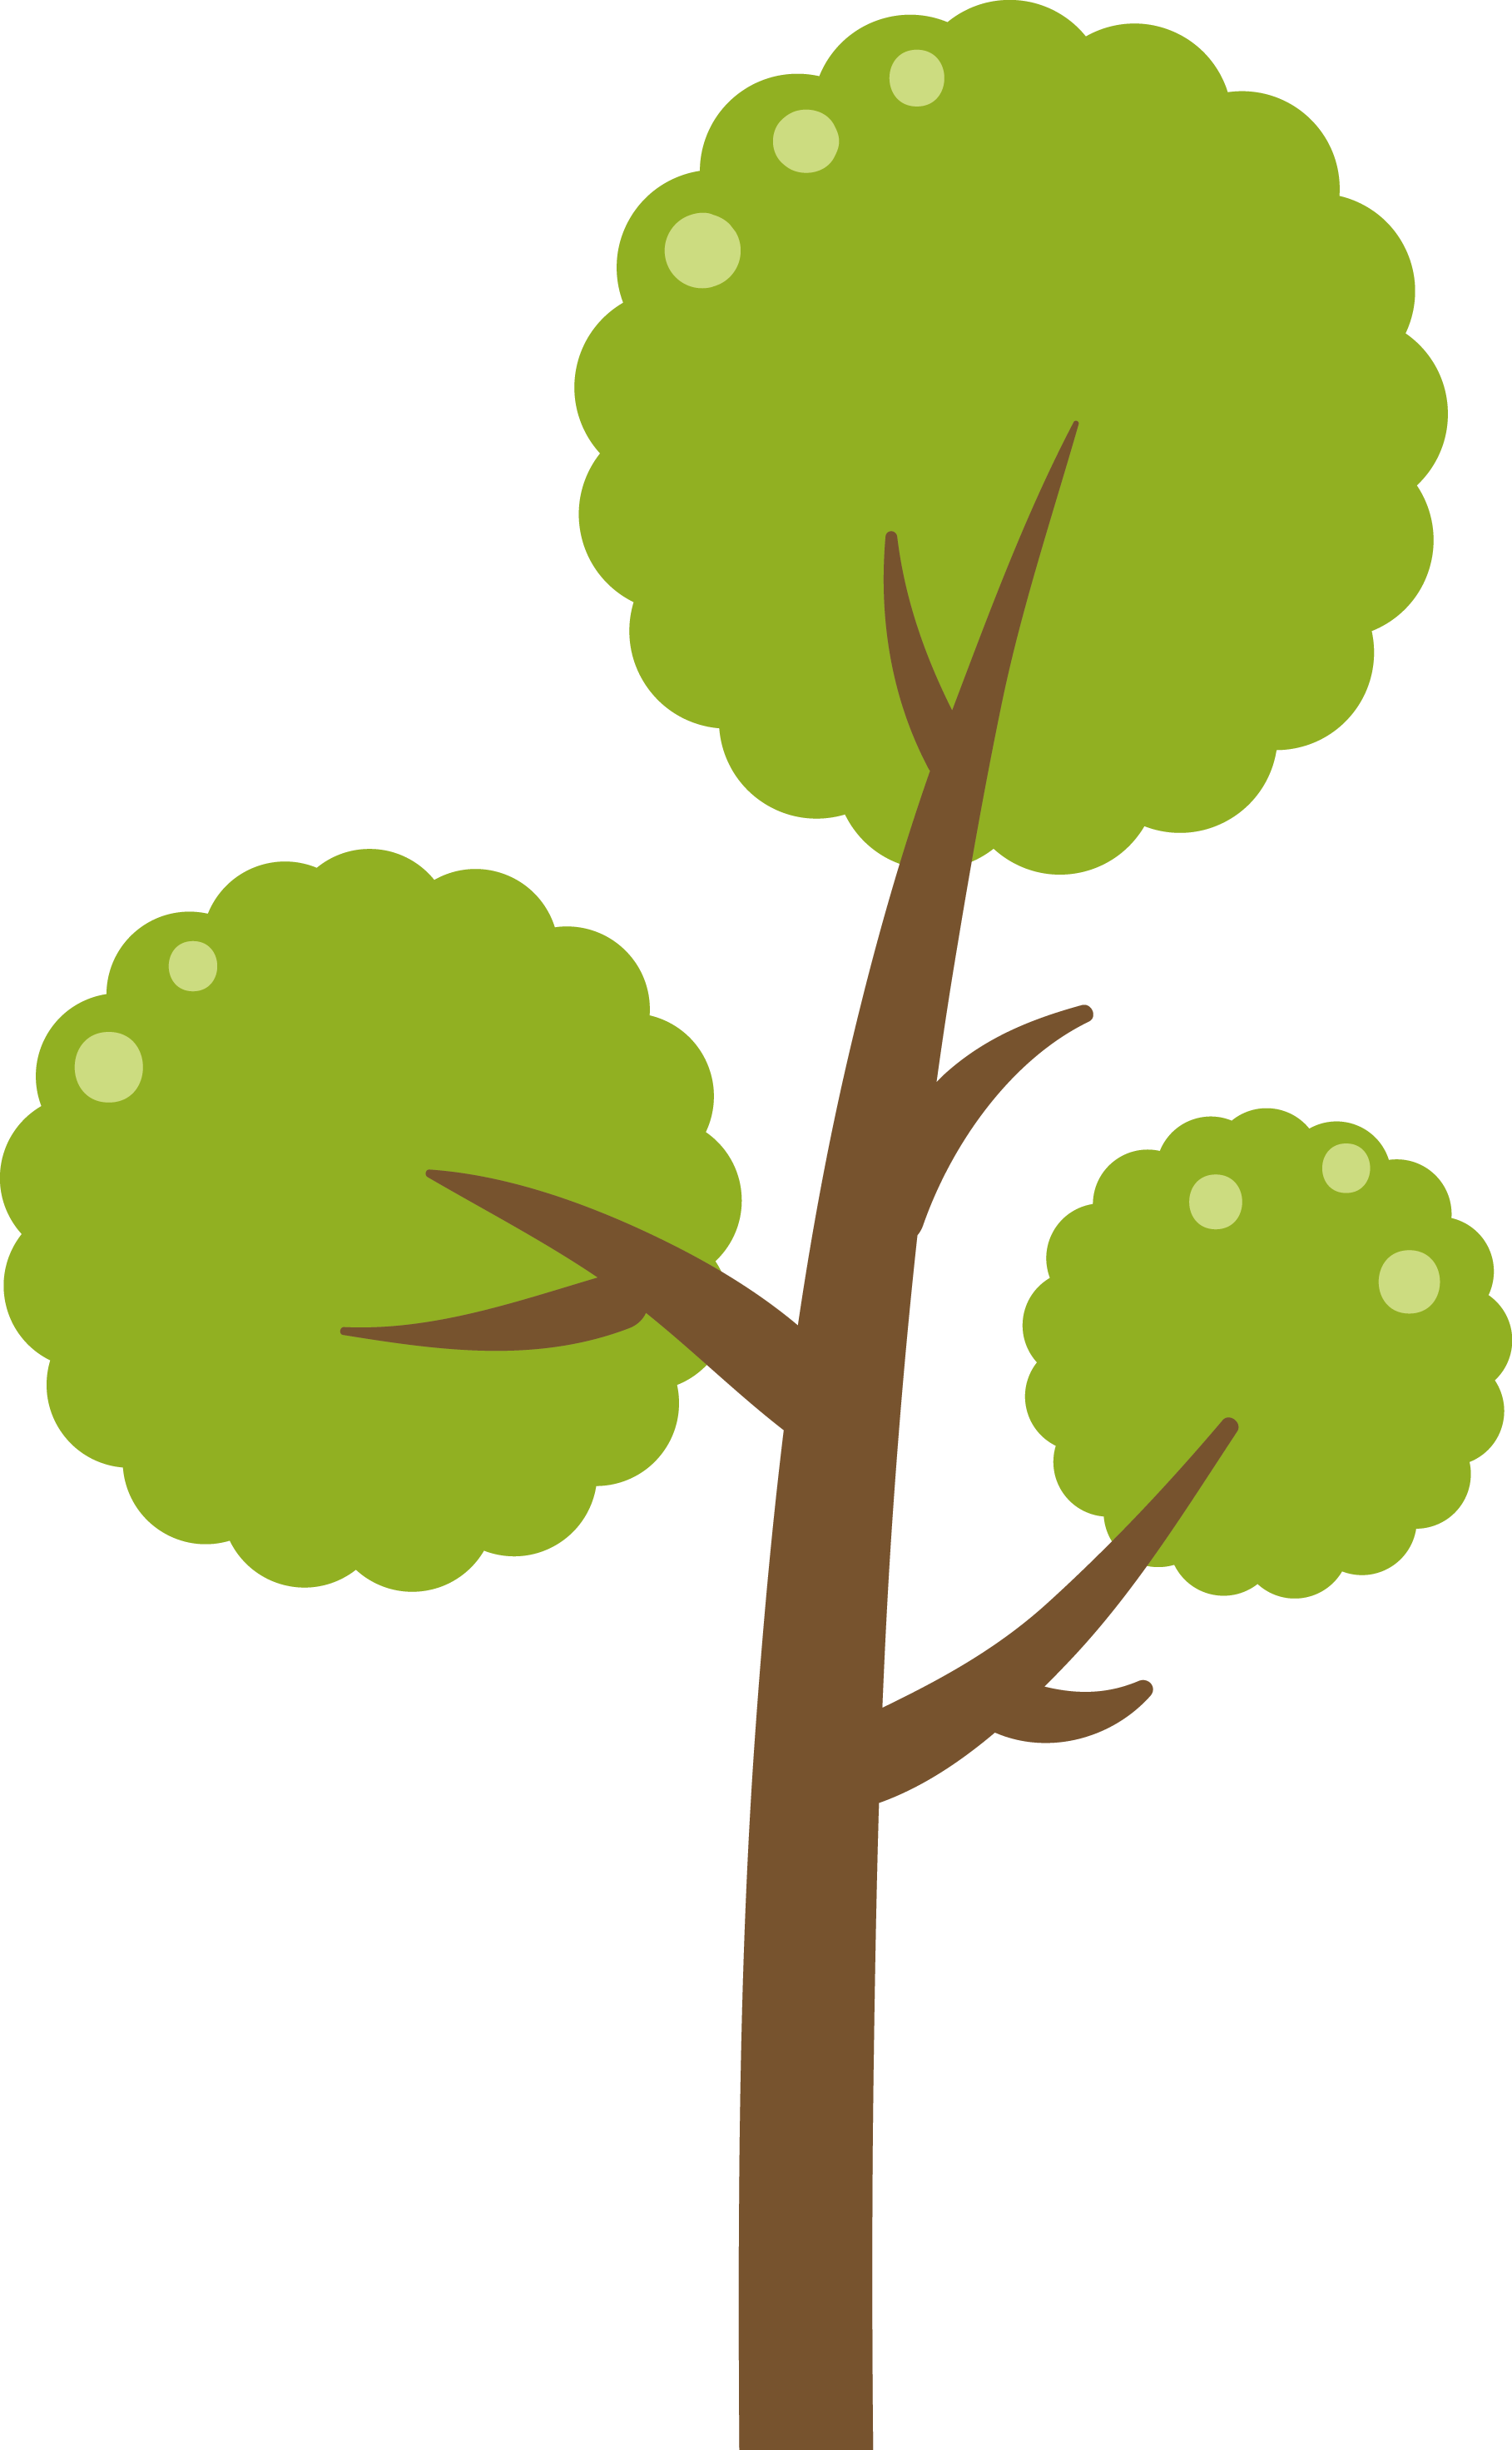 Planting clipart sapling. Green tree vector diagram